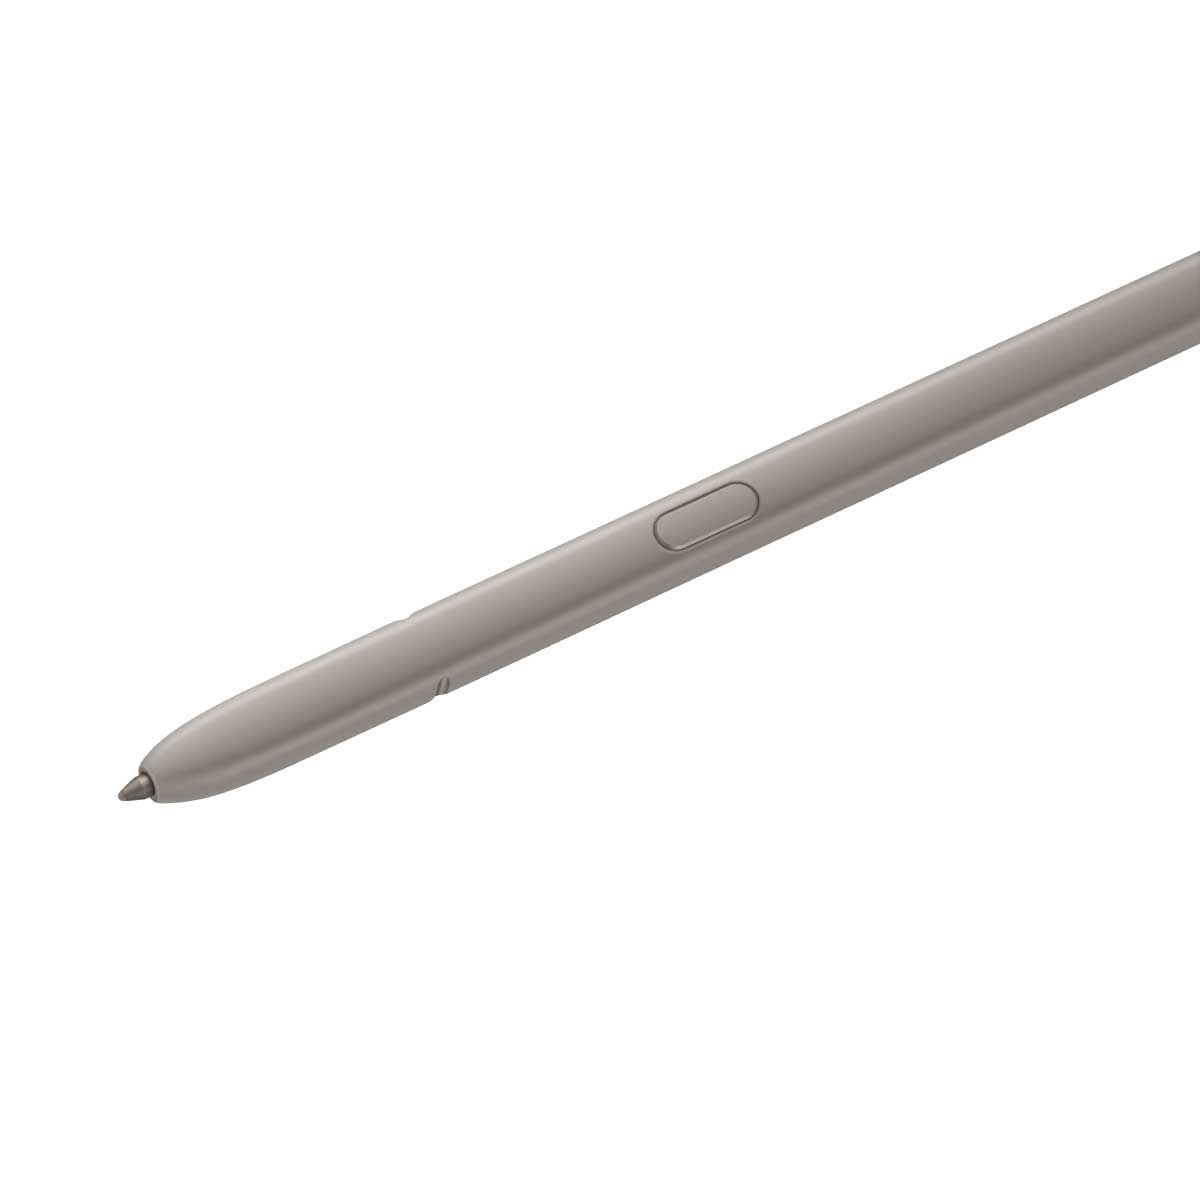 S Pen Galaxy S24Ultra  Gray  ปากกา สไตลัส